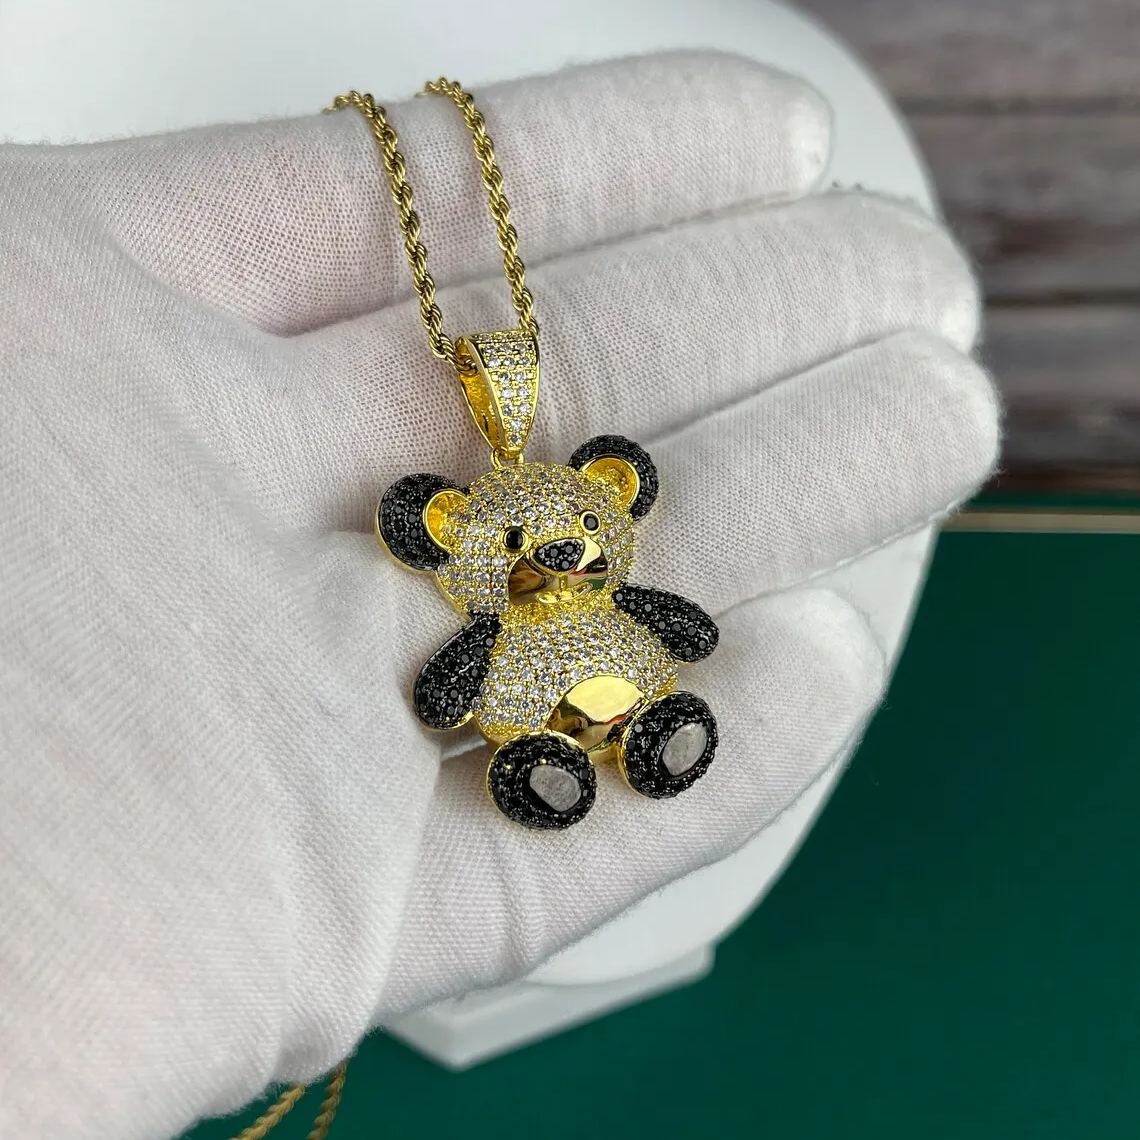 [Copy]Solid Gold Nugget Heart Love Pendant Vintage Charm Necklace